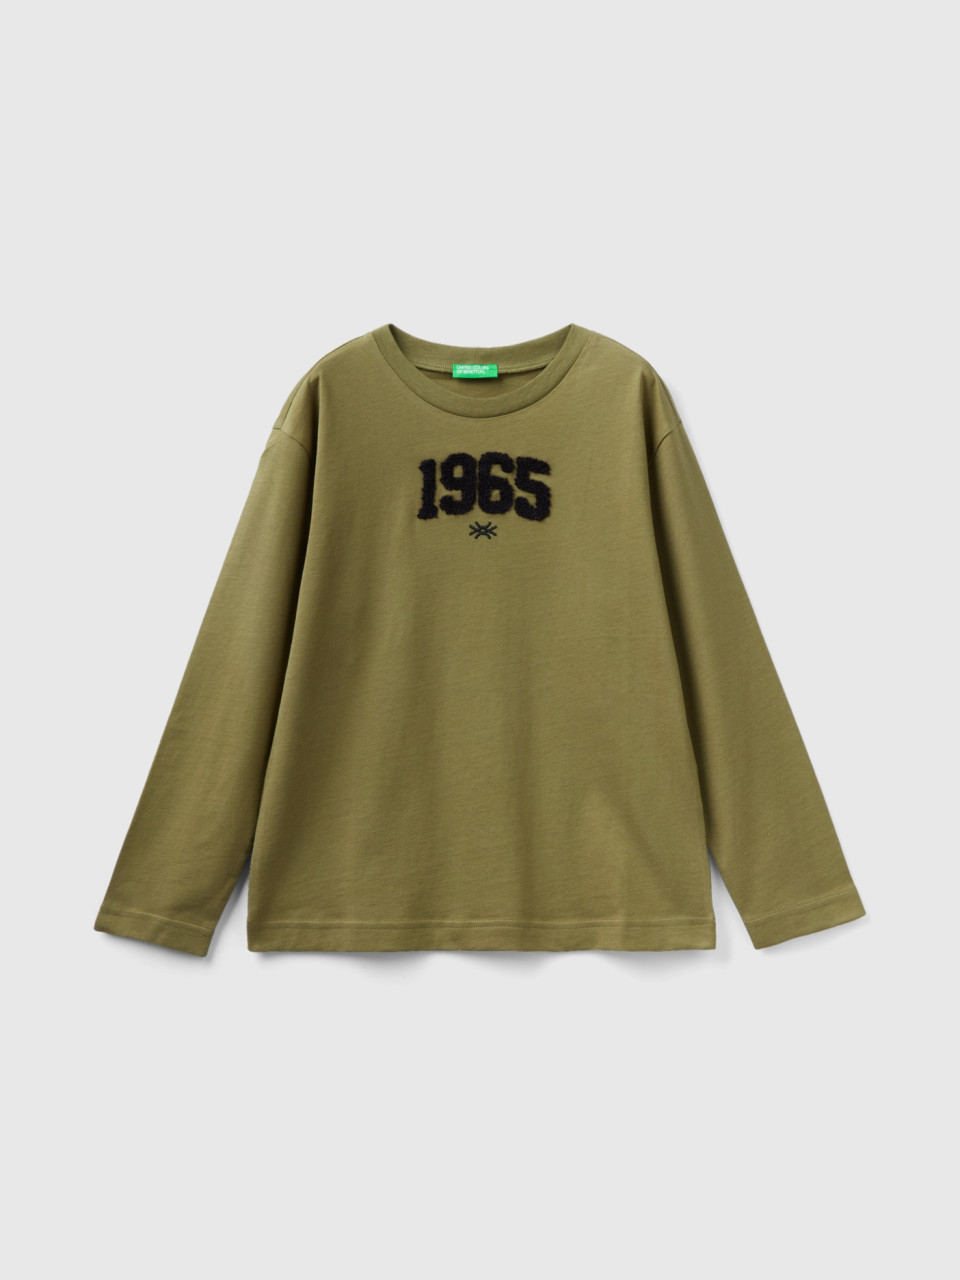 Benetton, Warm 100% Organic Cotton T-shirt, Military Green, Kids